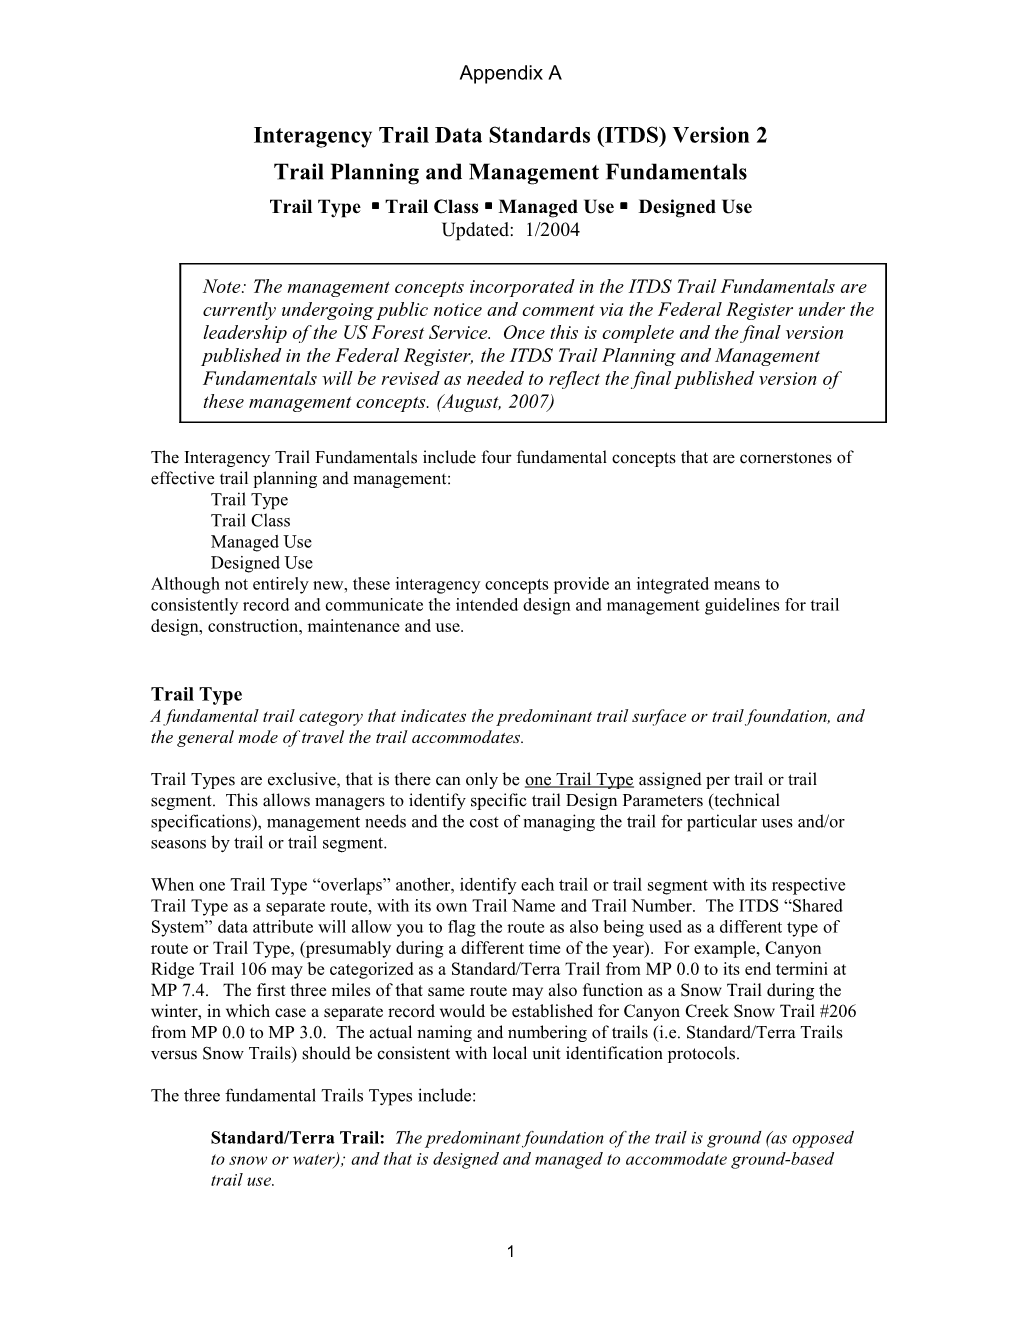 Interagency Trail Data Standards (ITDS) Version 2